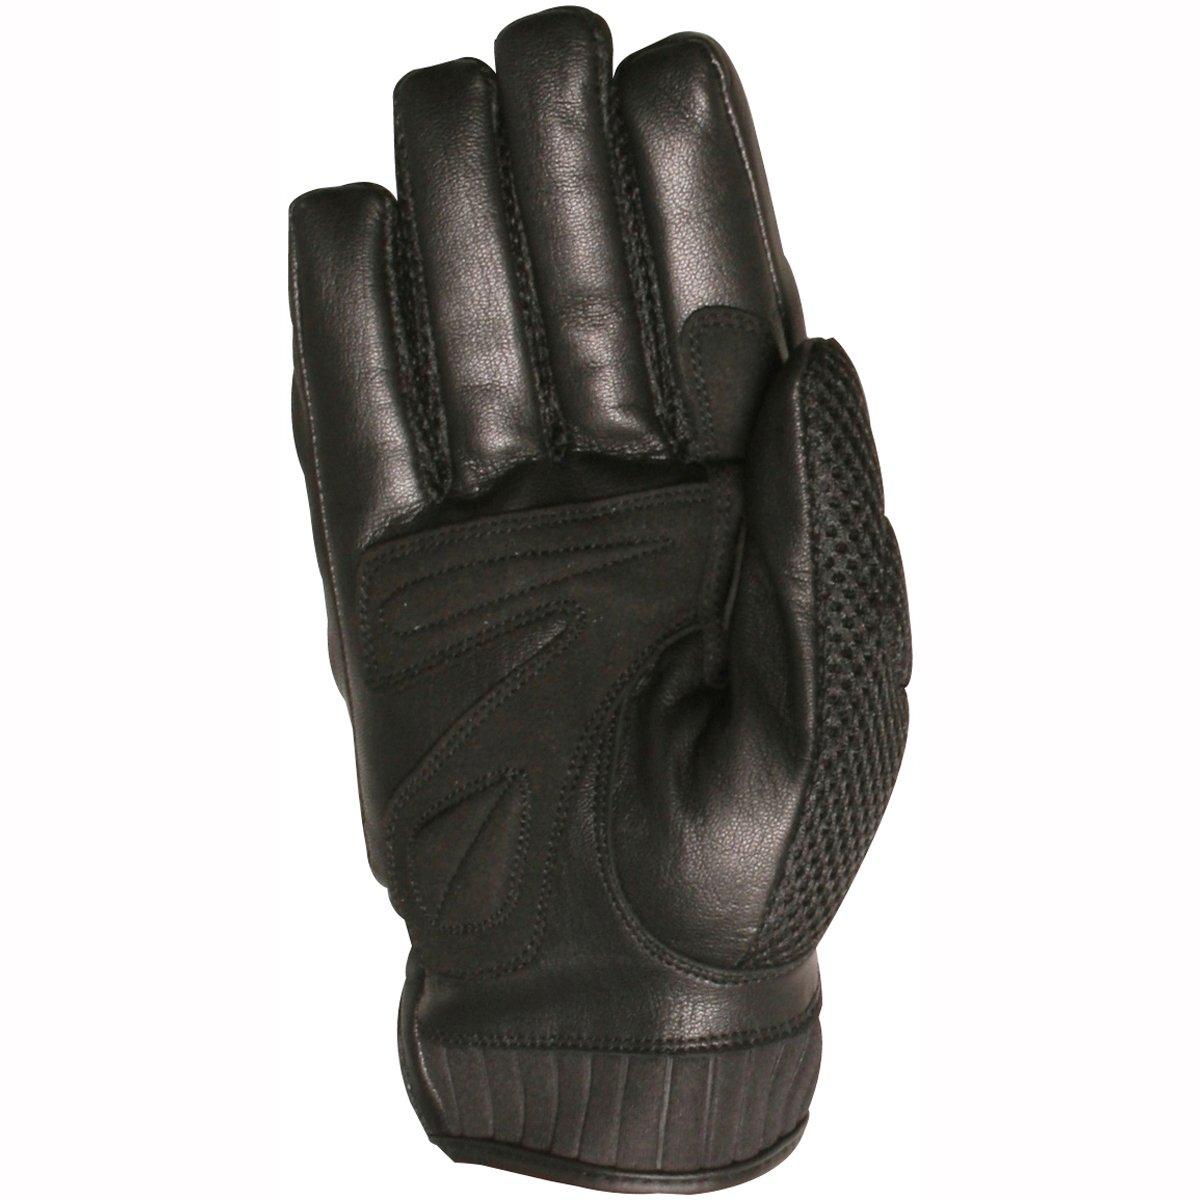 Weise Airflow Plus Gloves Black - Mesh Motorcycle Gloves